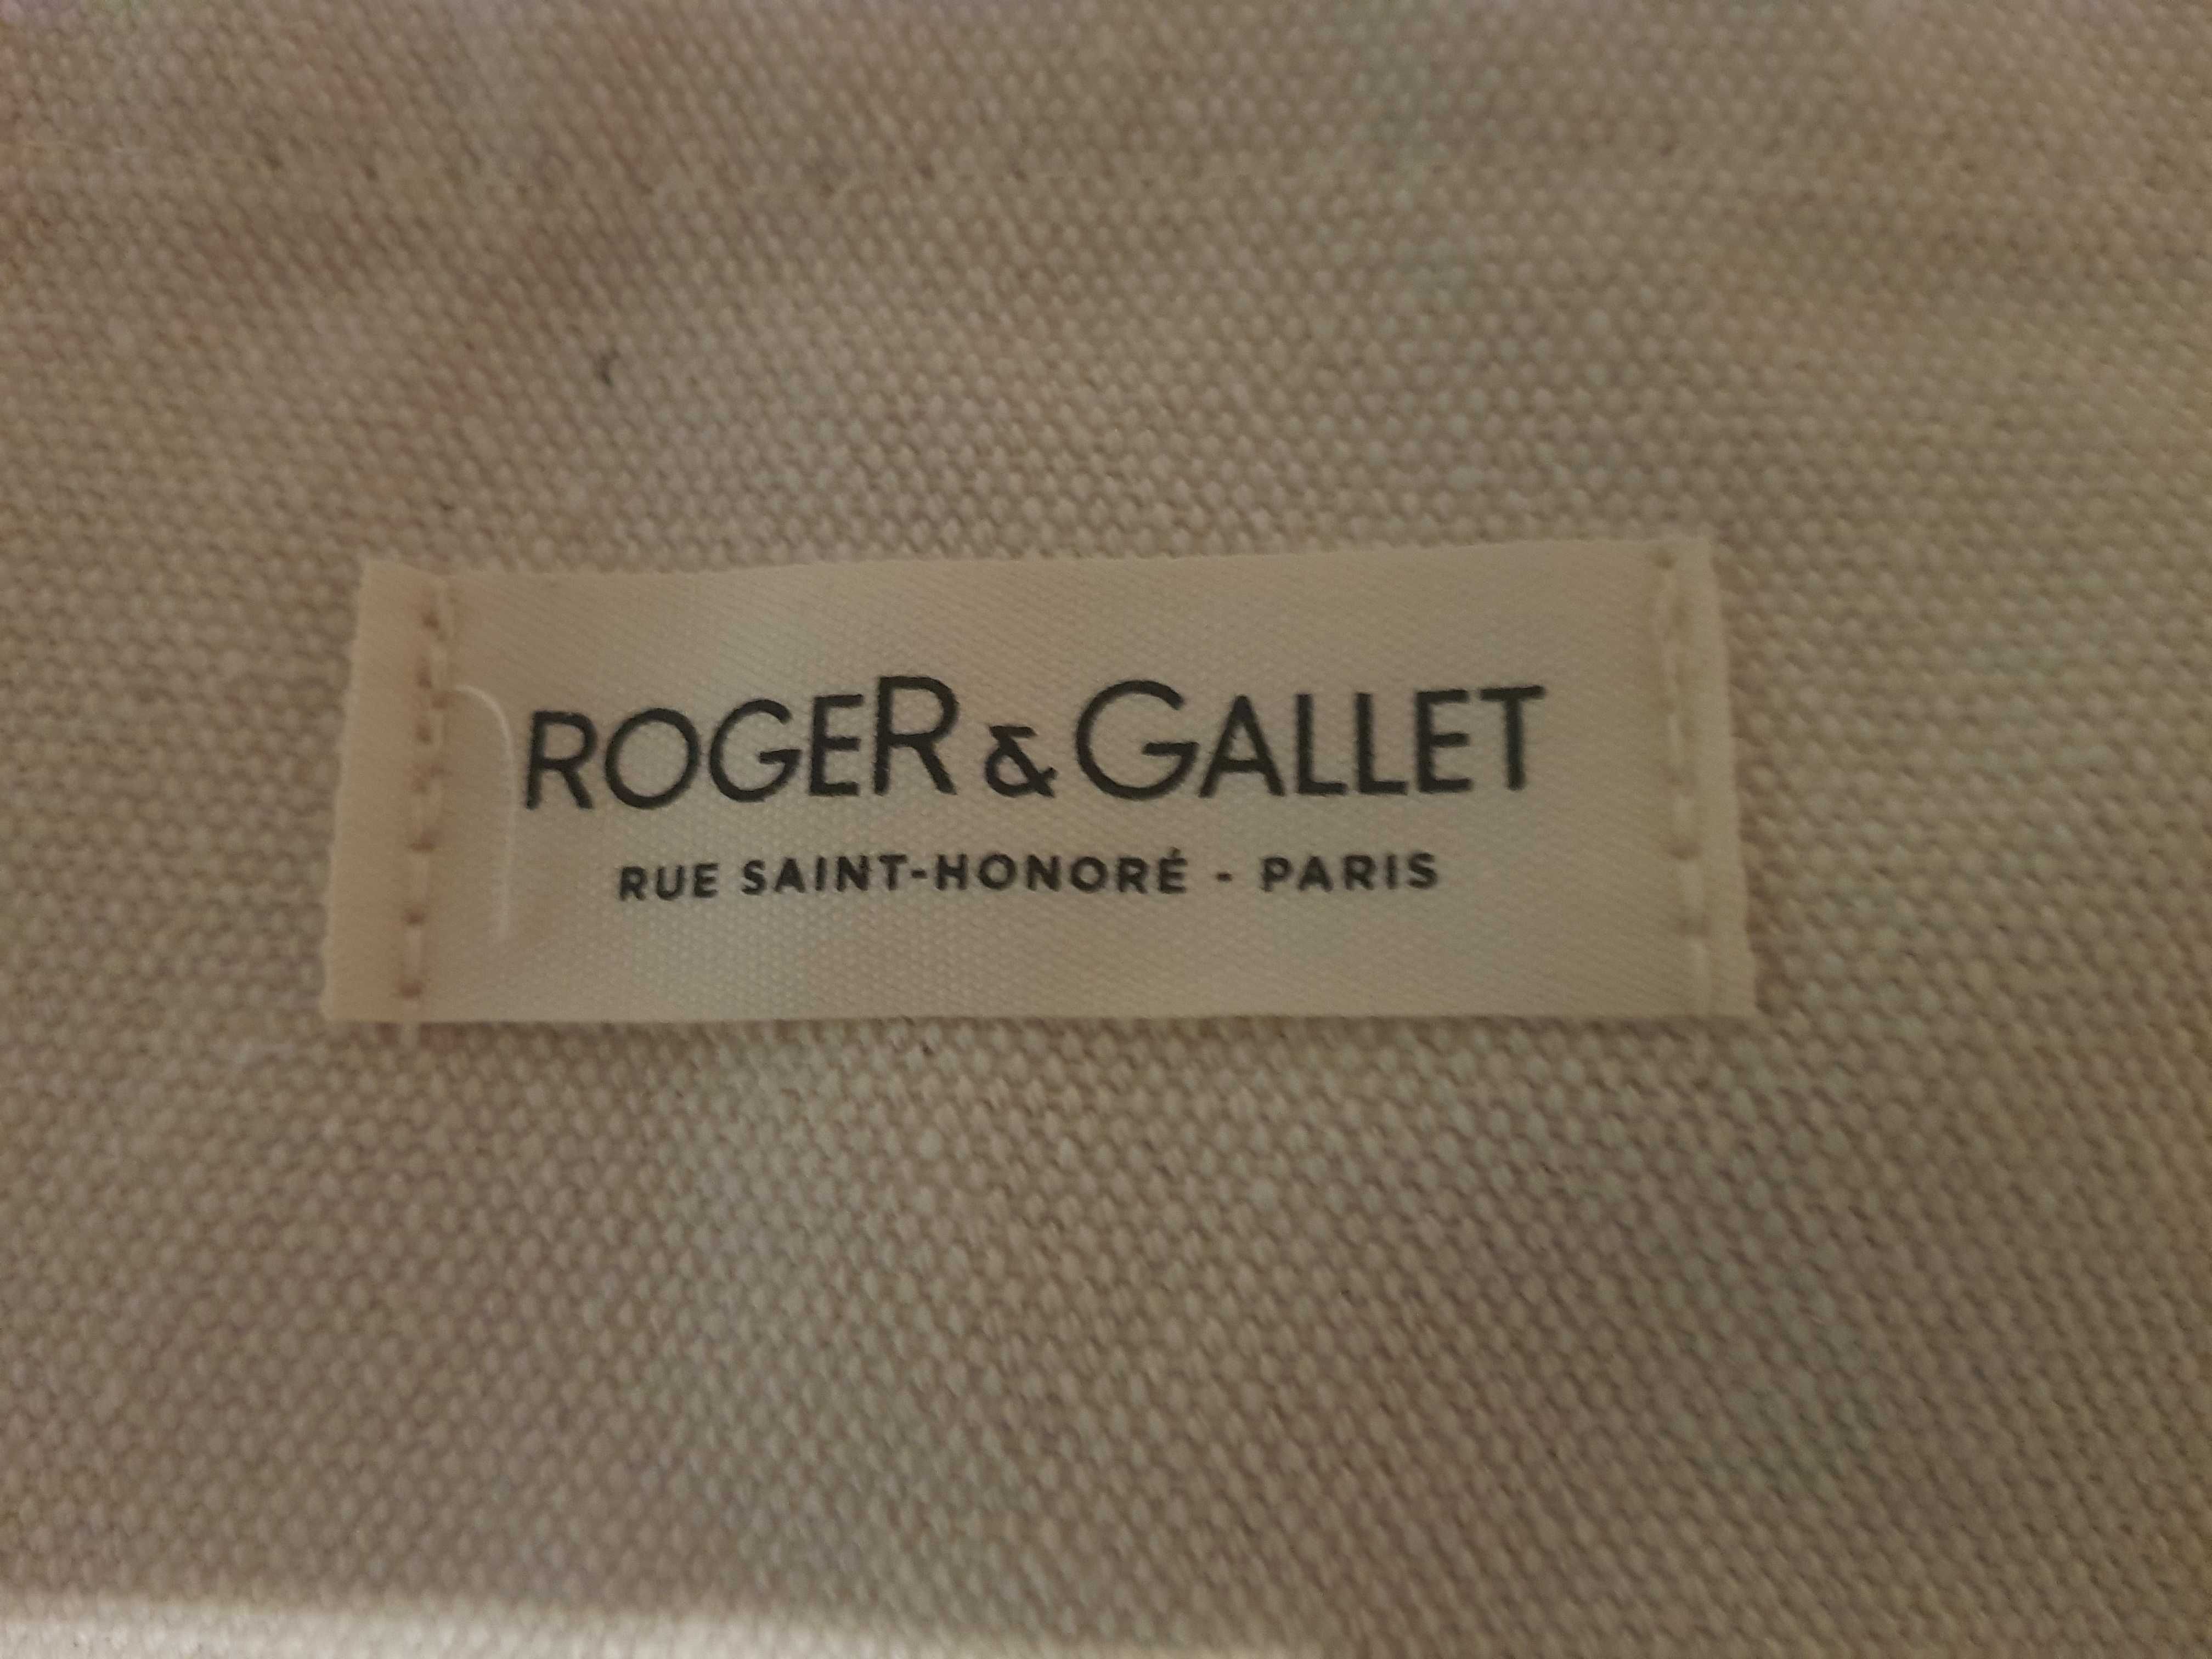 Bolsa / Saco Roger & Gallet Paris NOVO